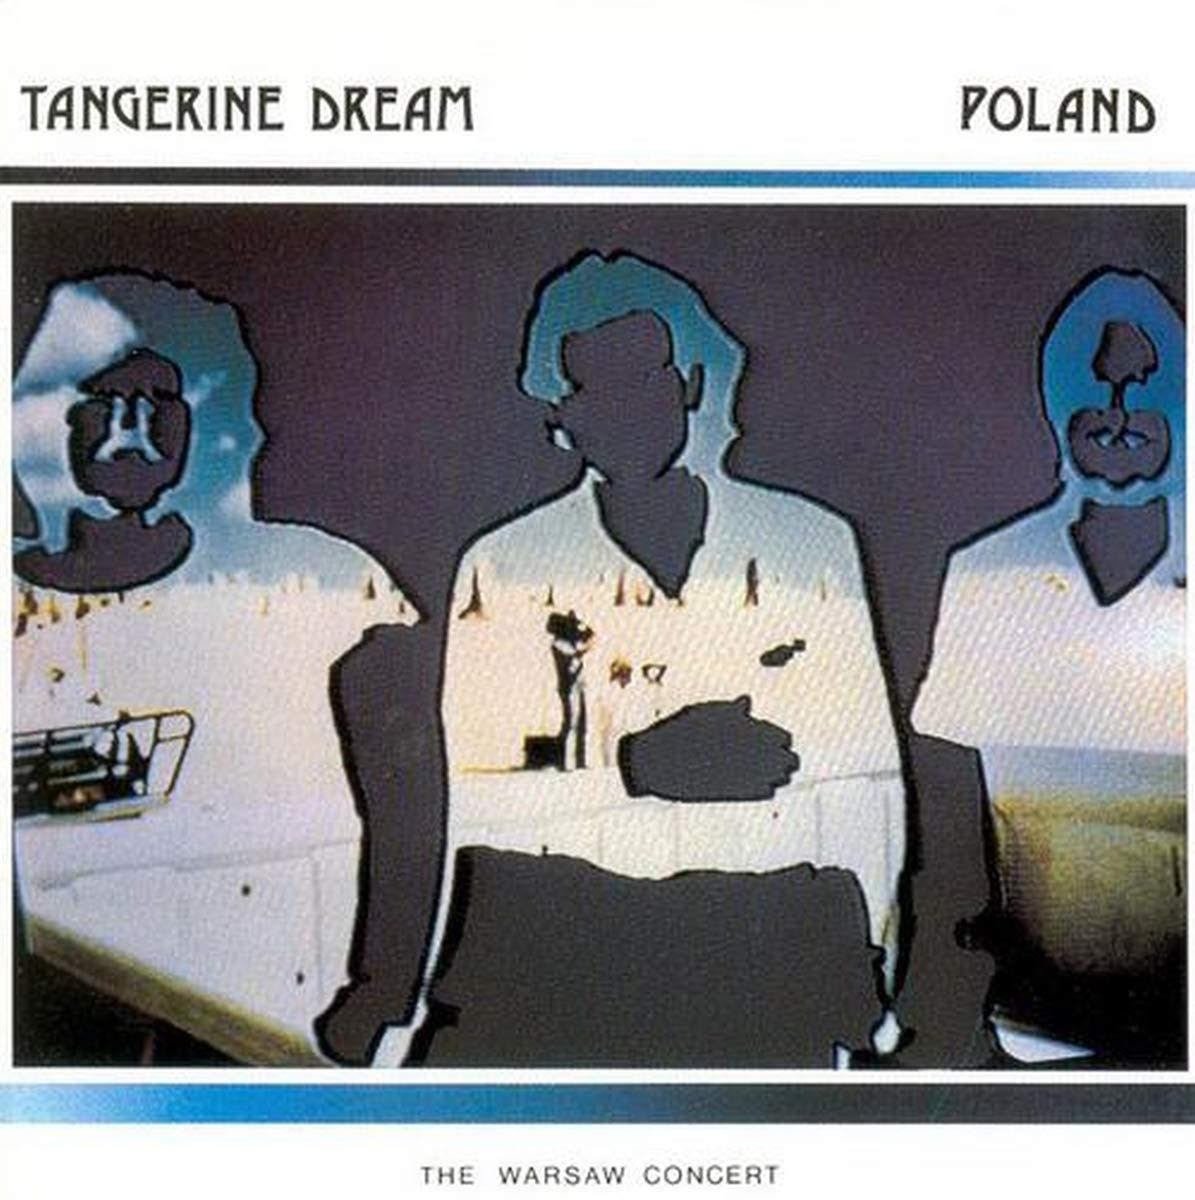 Tangerine Dream - Poland - The Warsaw Concert (2 CD  - Import)